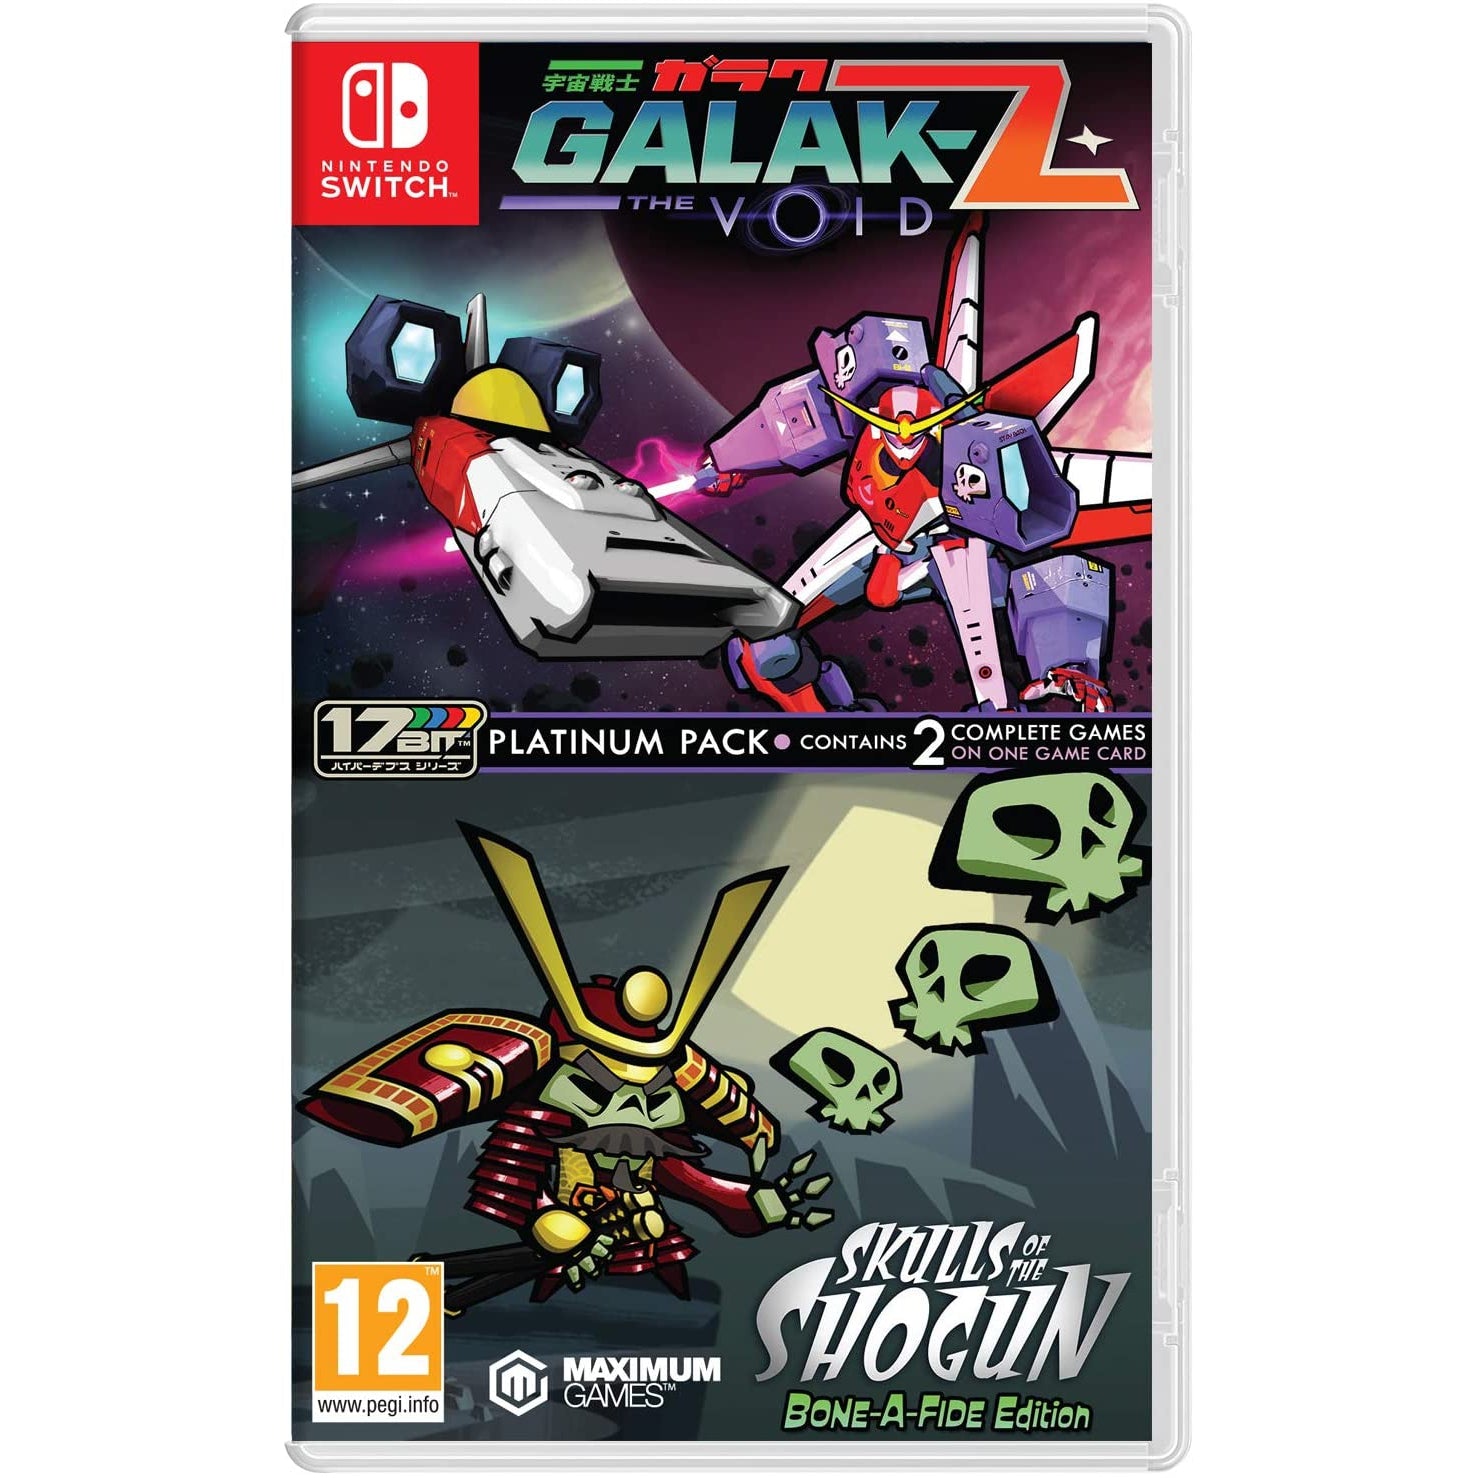 Galak-Z: The Void & Skulls of the Shogun: Bonafide Edition - Platinum Pack (Nintendo Switch)